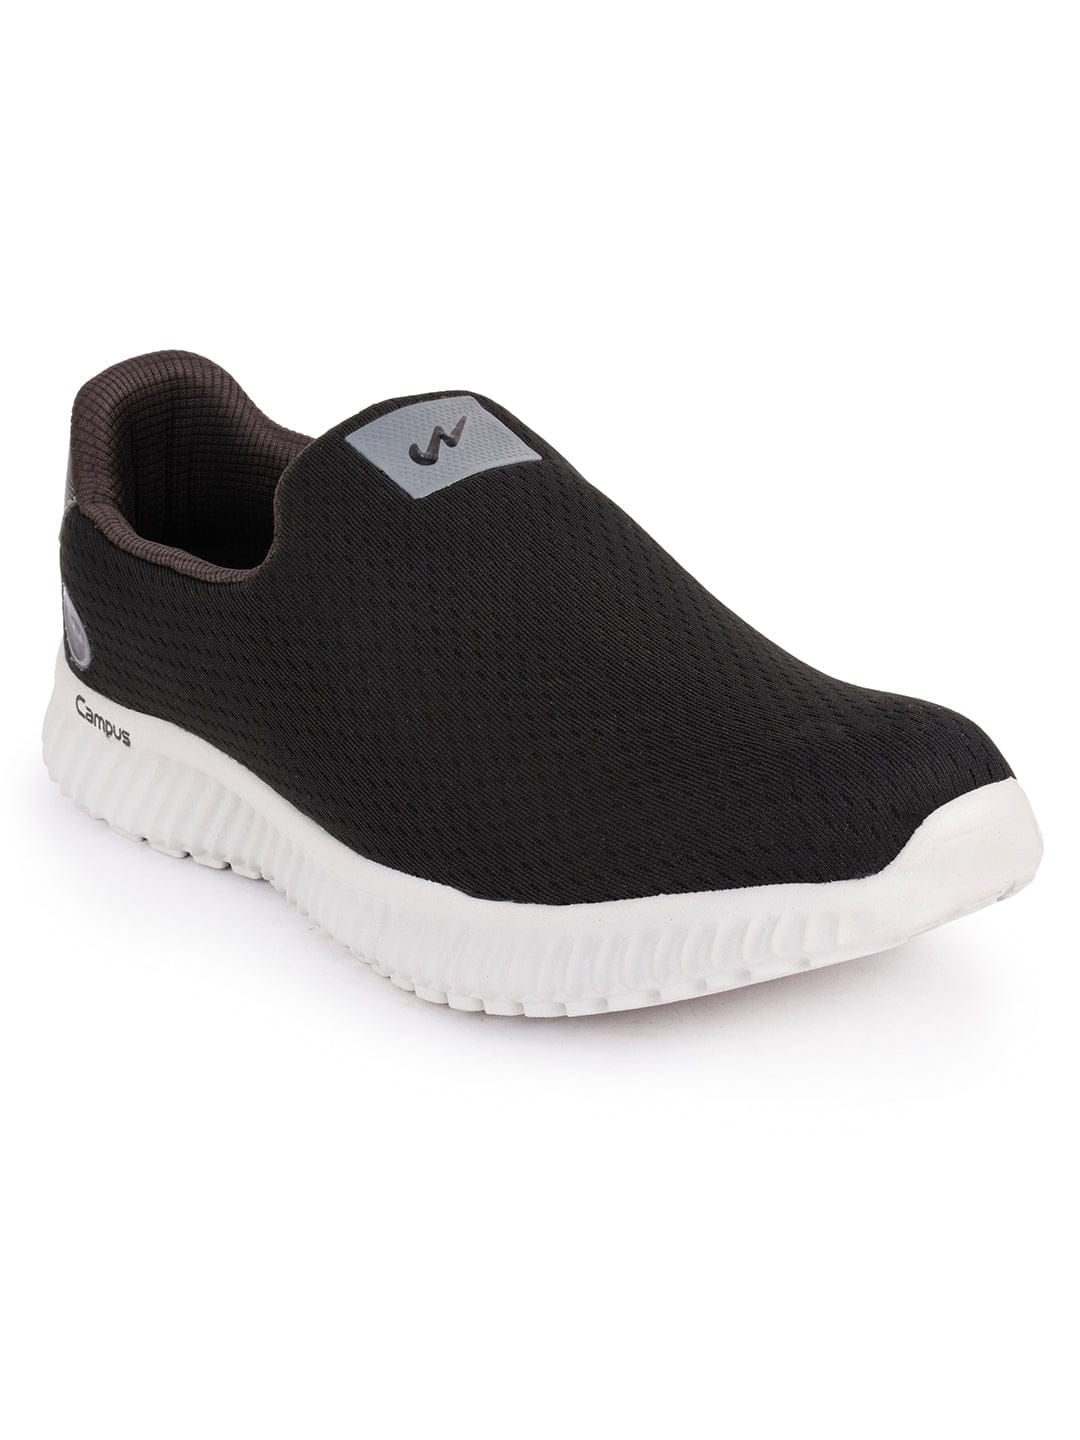 Buy OXYFIT N Black Men's Walking Shoes online | Campus Shoes